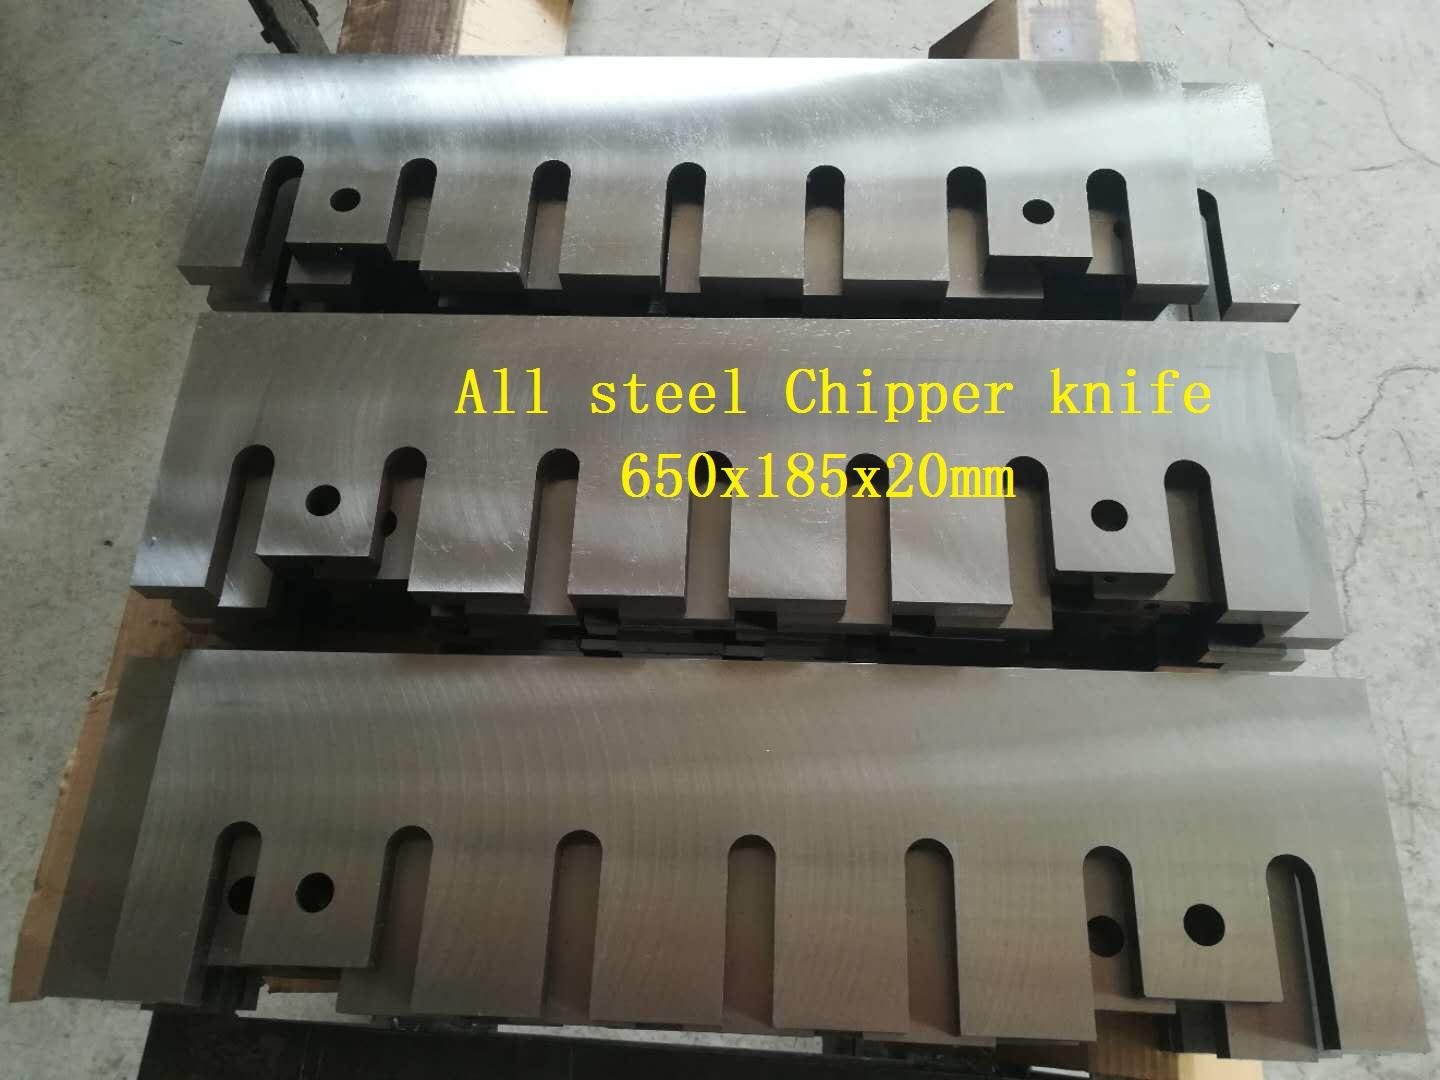 All steel Chipper knife